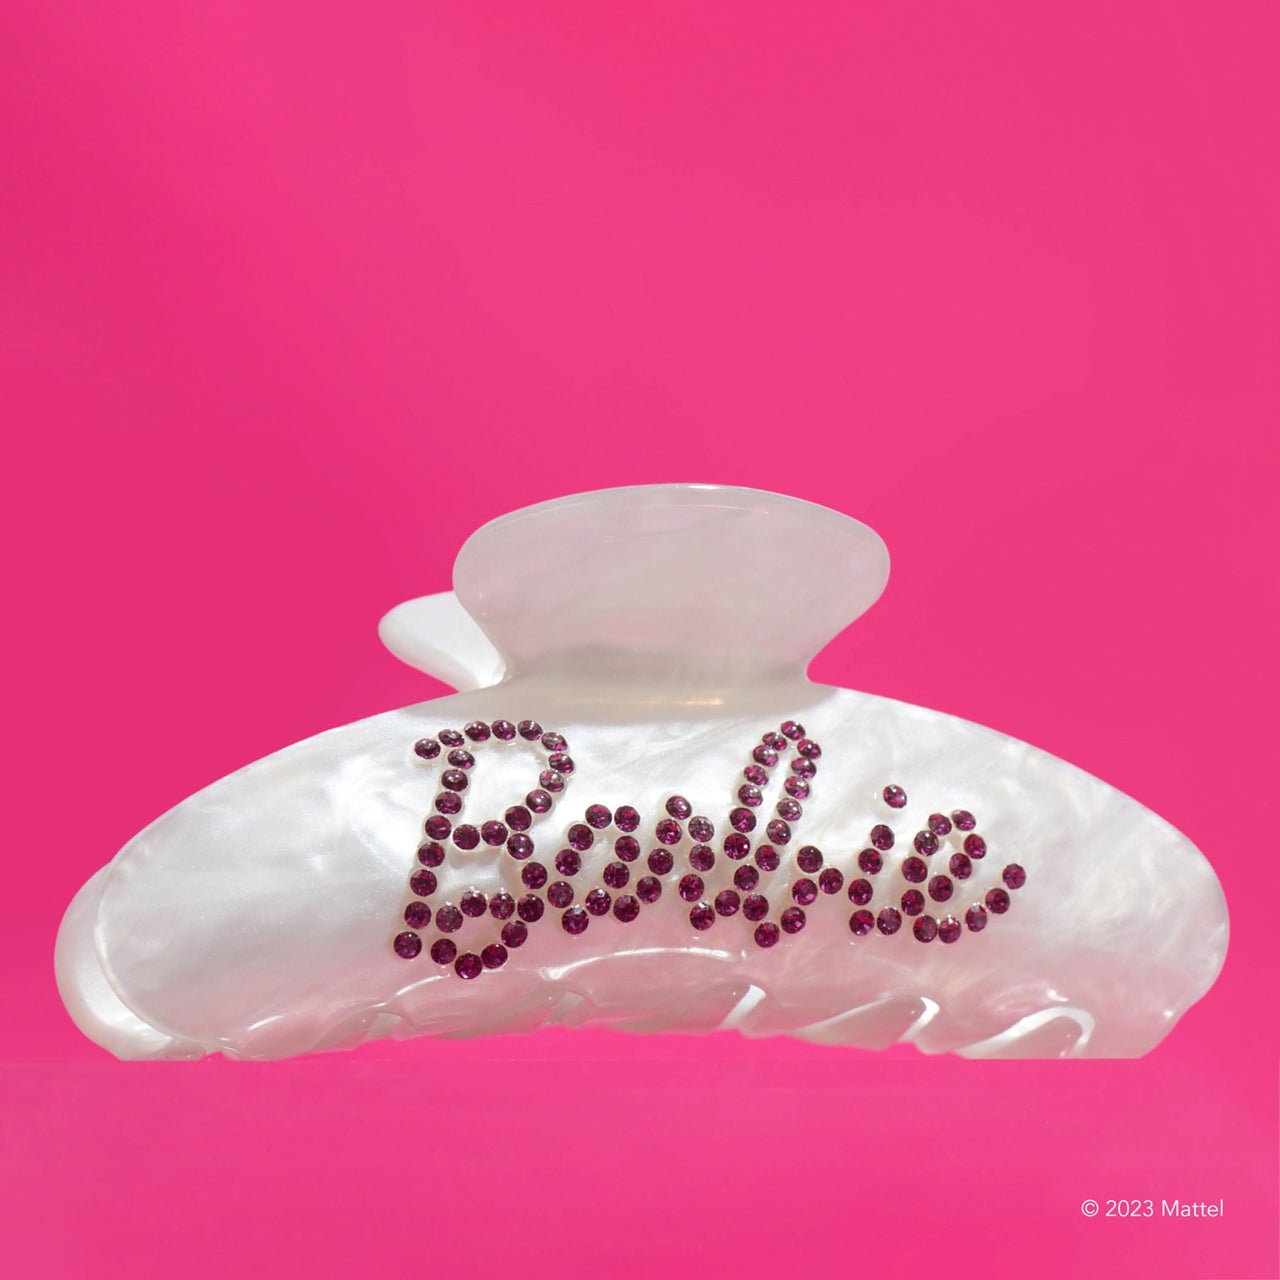 Barbie™ x Kitsch-verzamelbundel